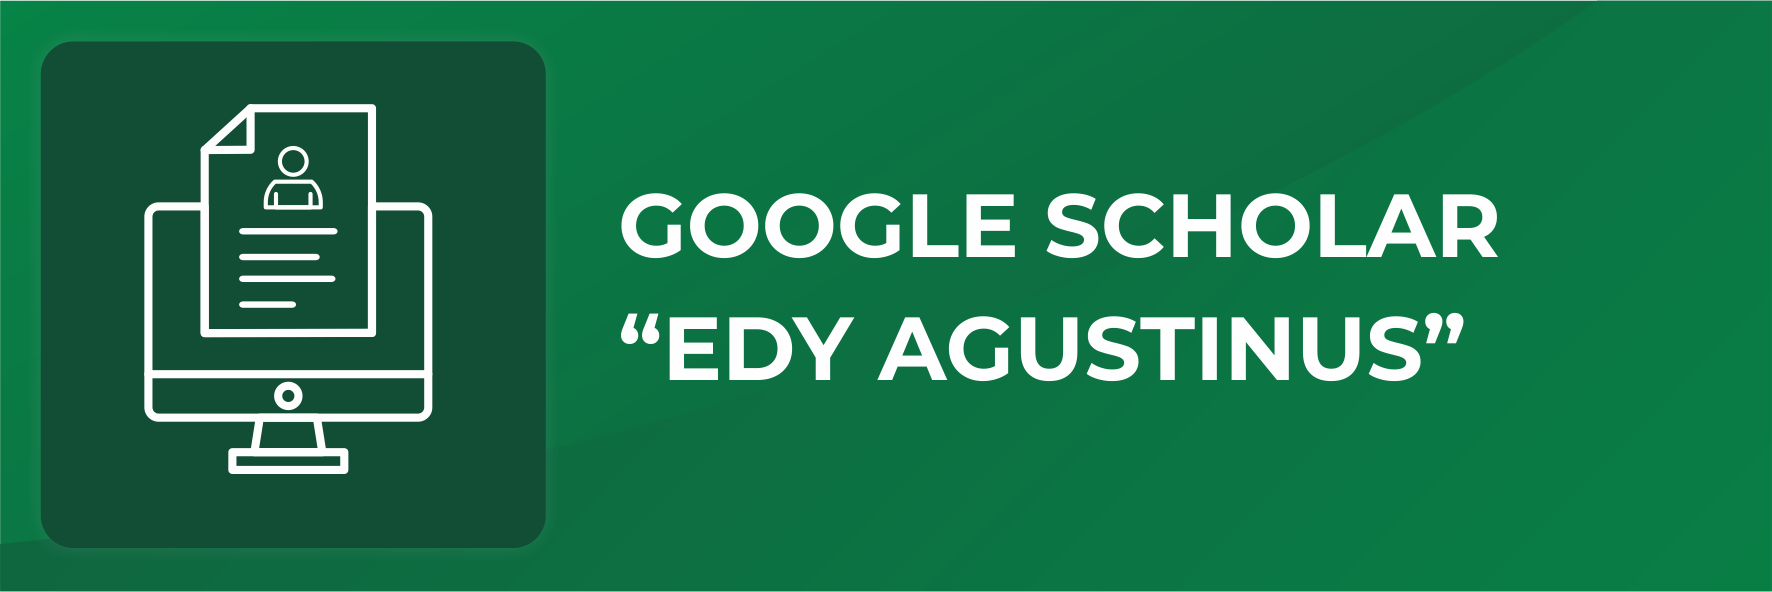 Edy Agustinus